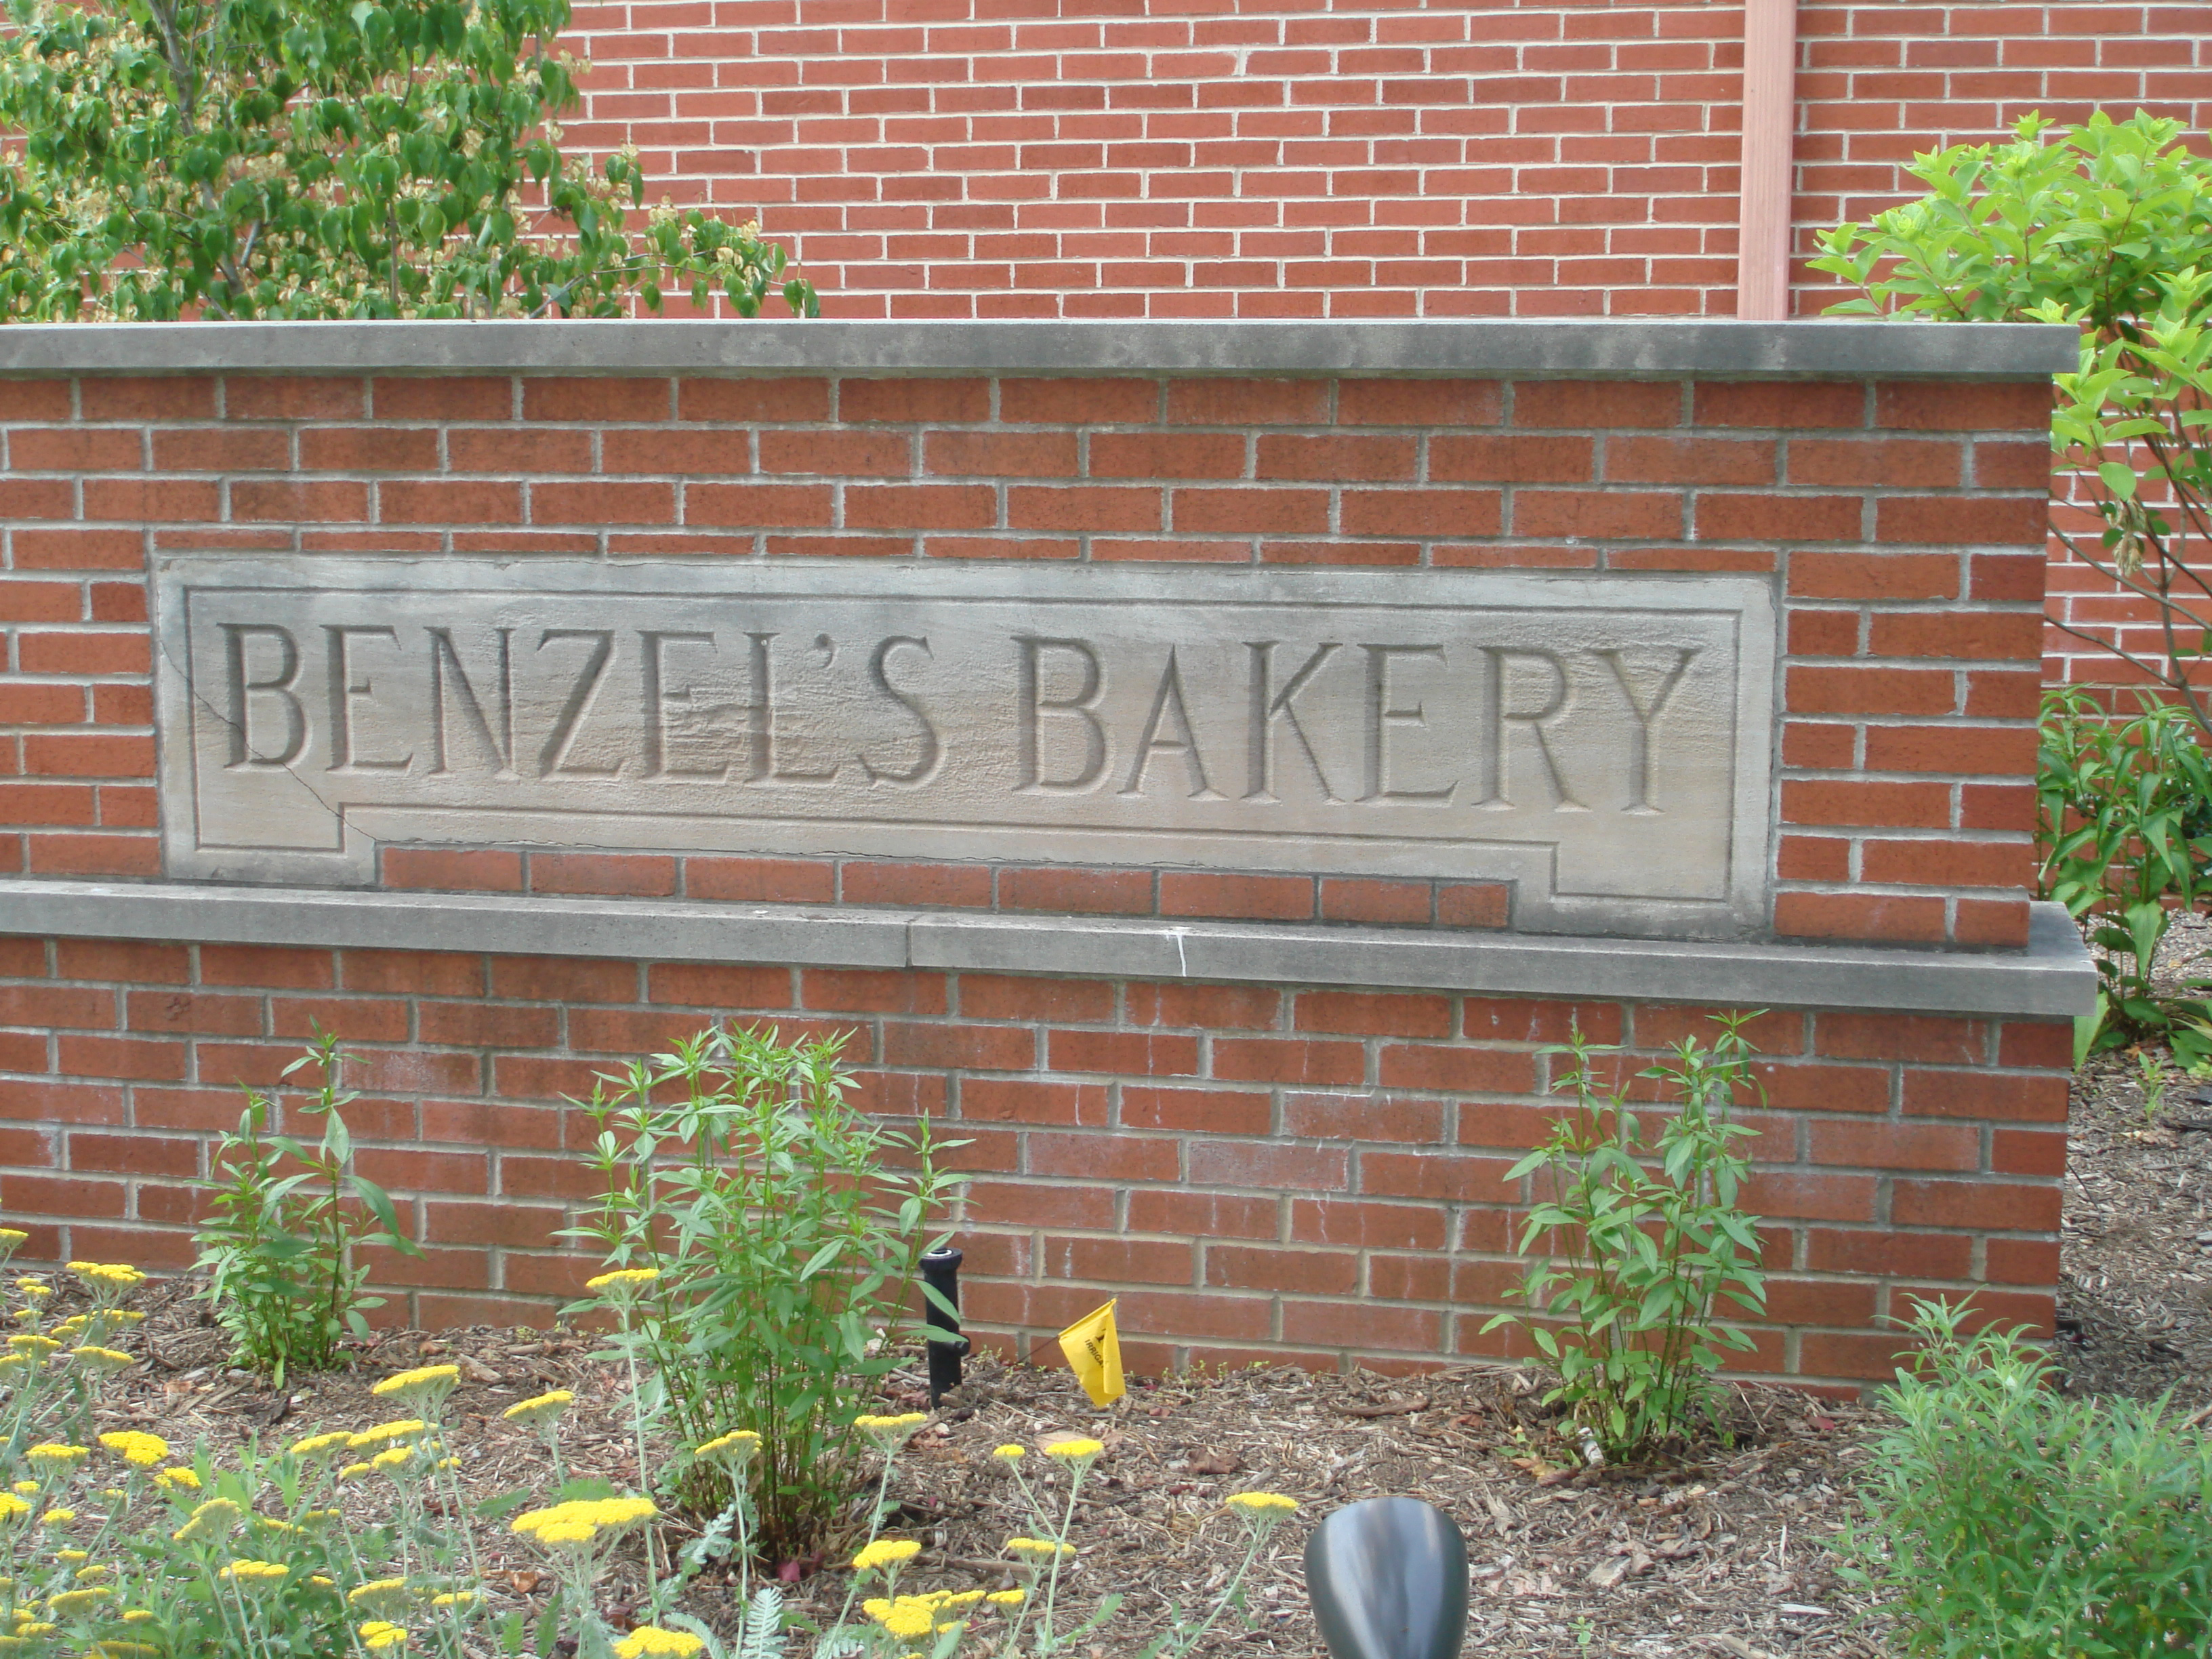 Benzel's Bakery